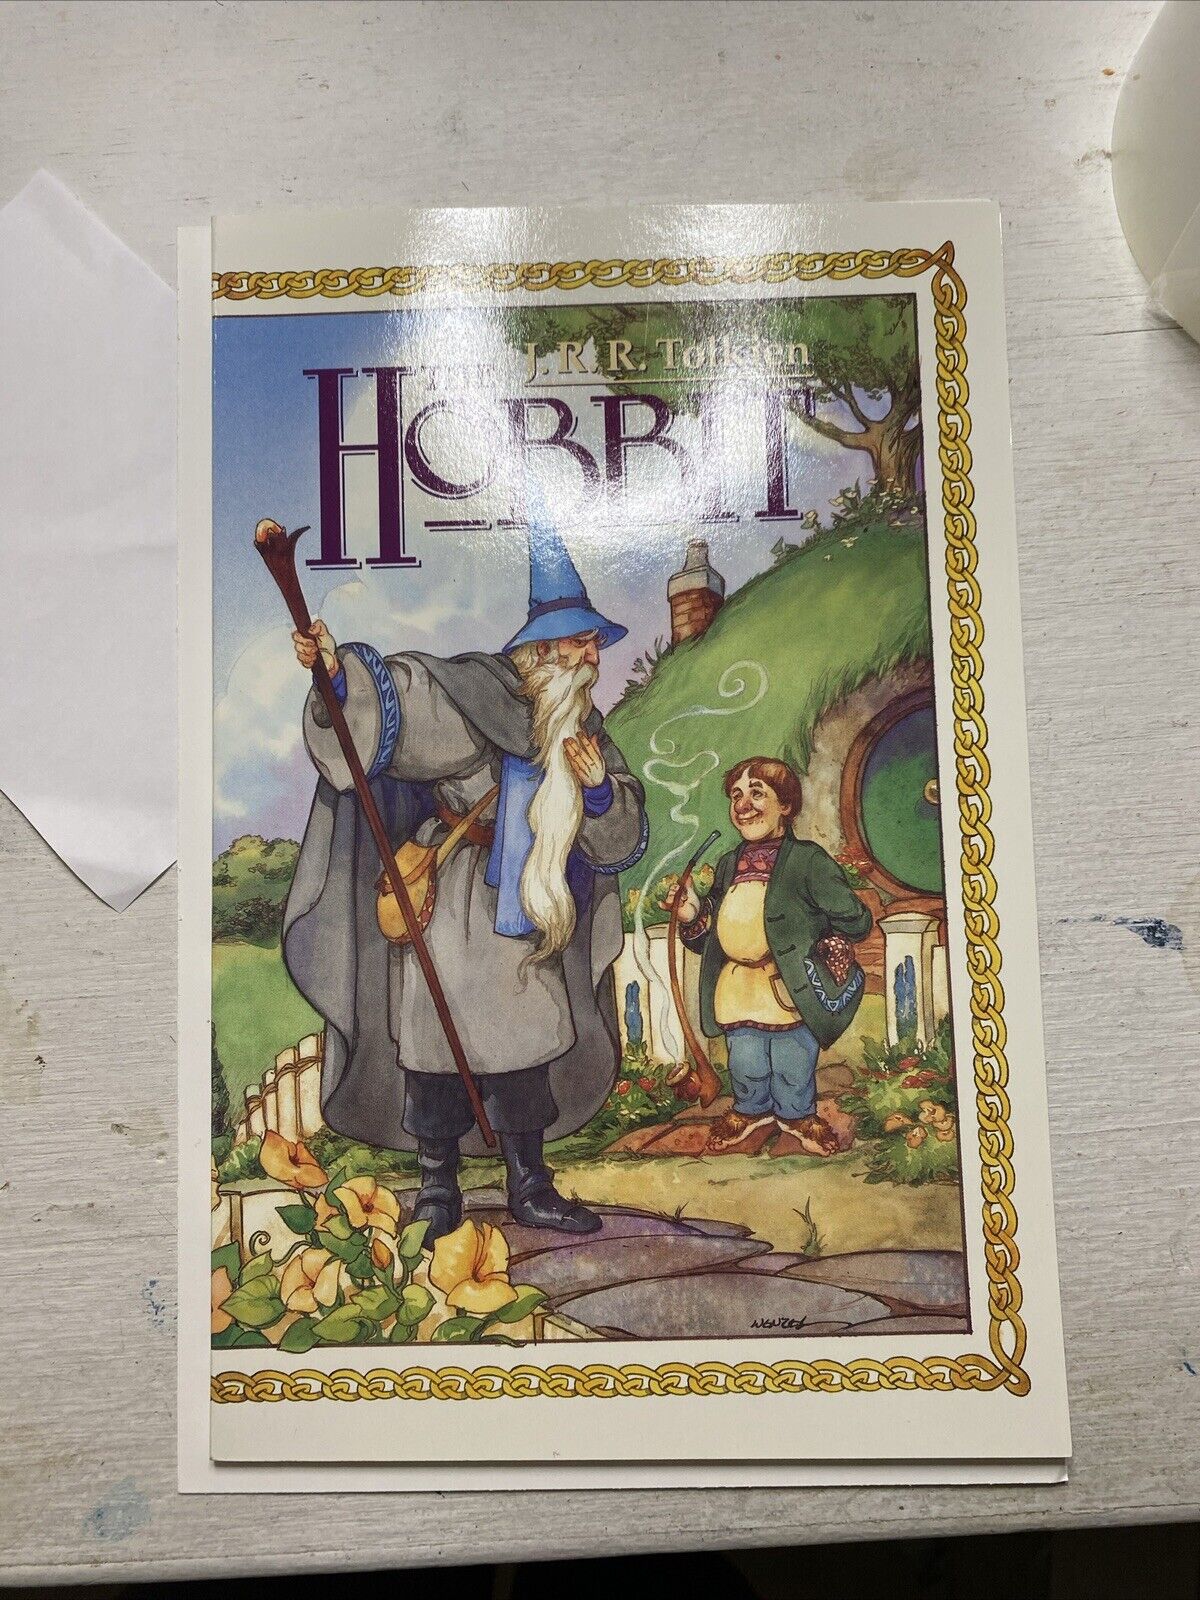 The Hobbit Graphic Novel #1 1989 1st Printing JRR Tolkien Eclipse Comics NM @